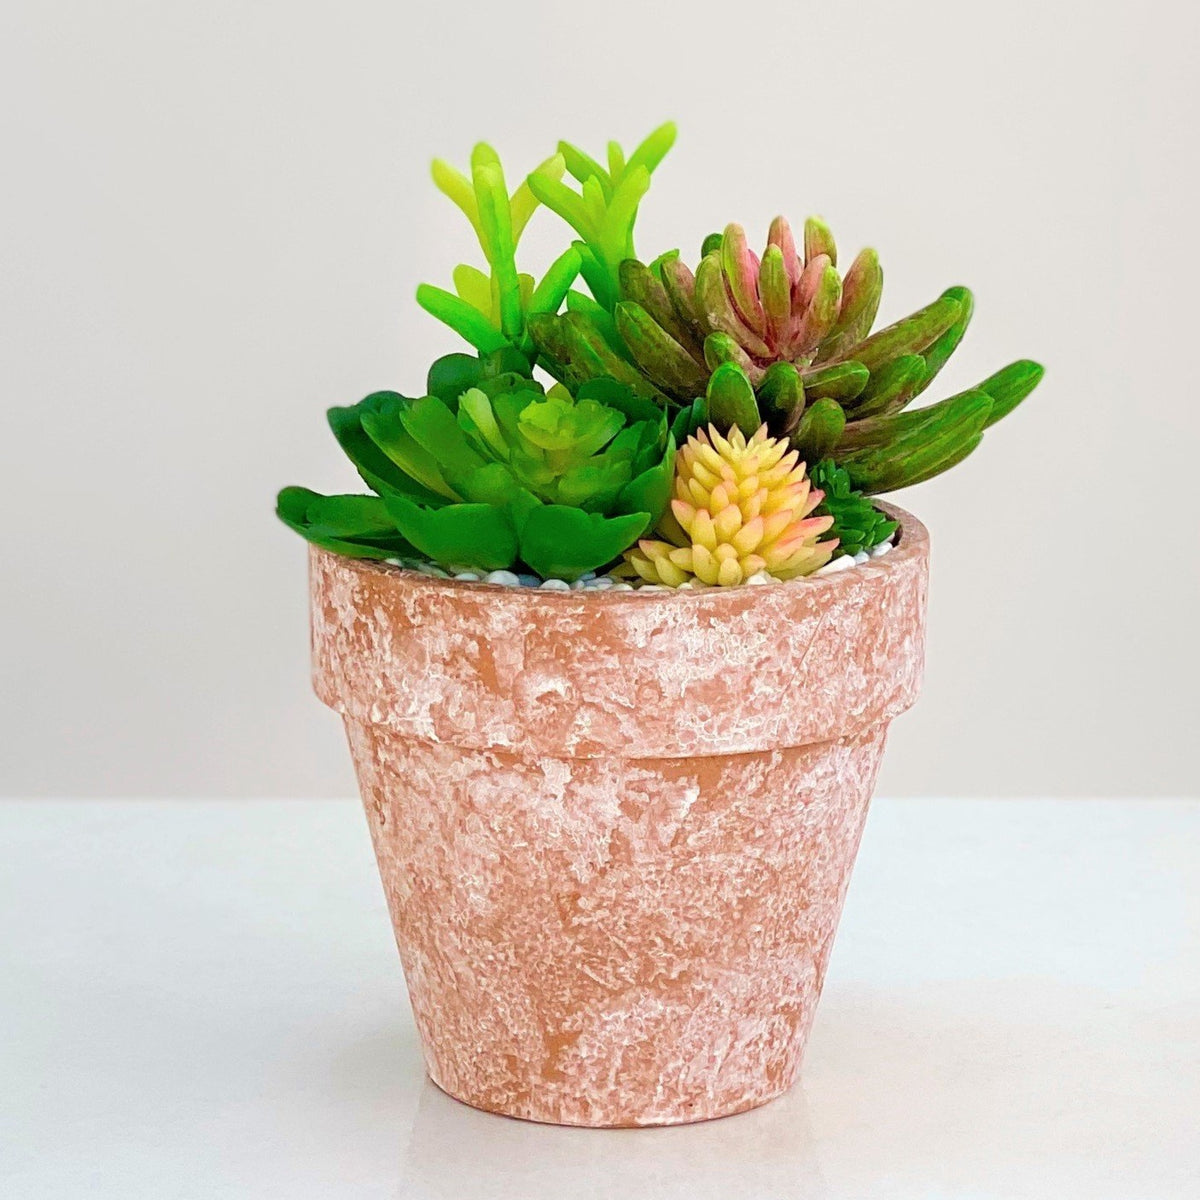 Succulent Arrangement in a Round Mud Pot